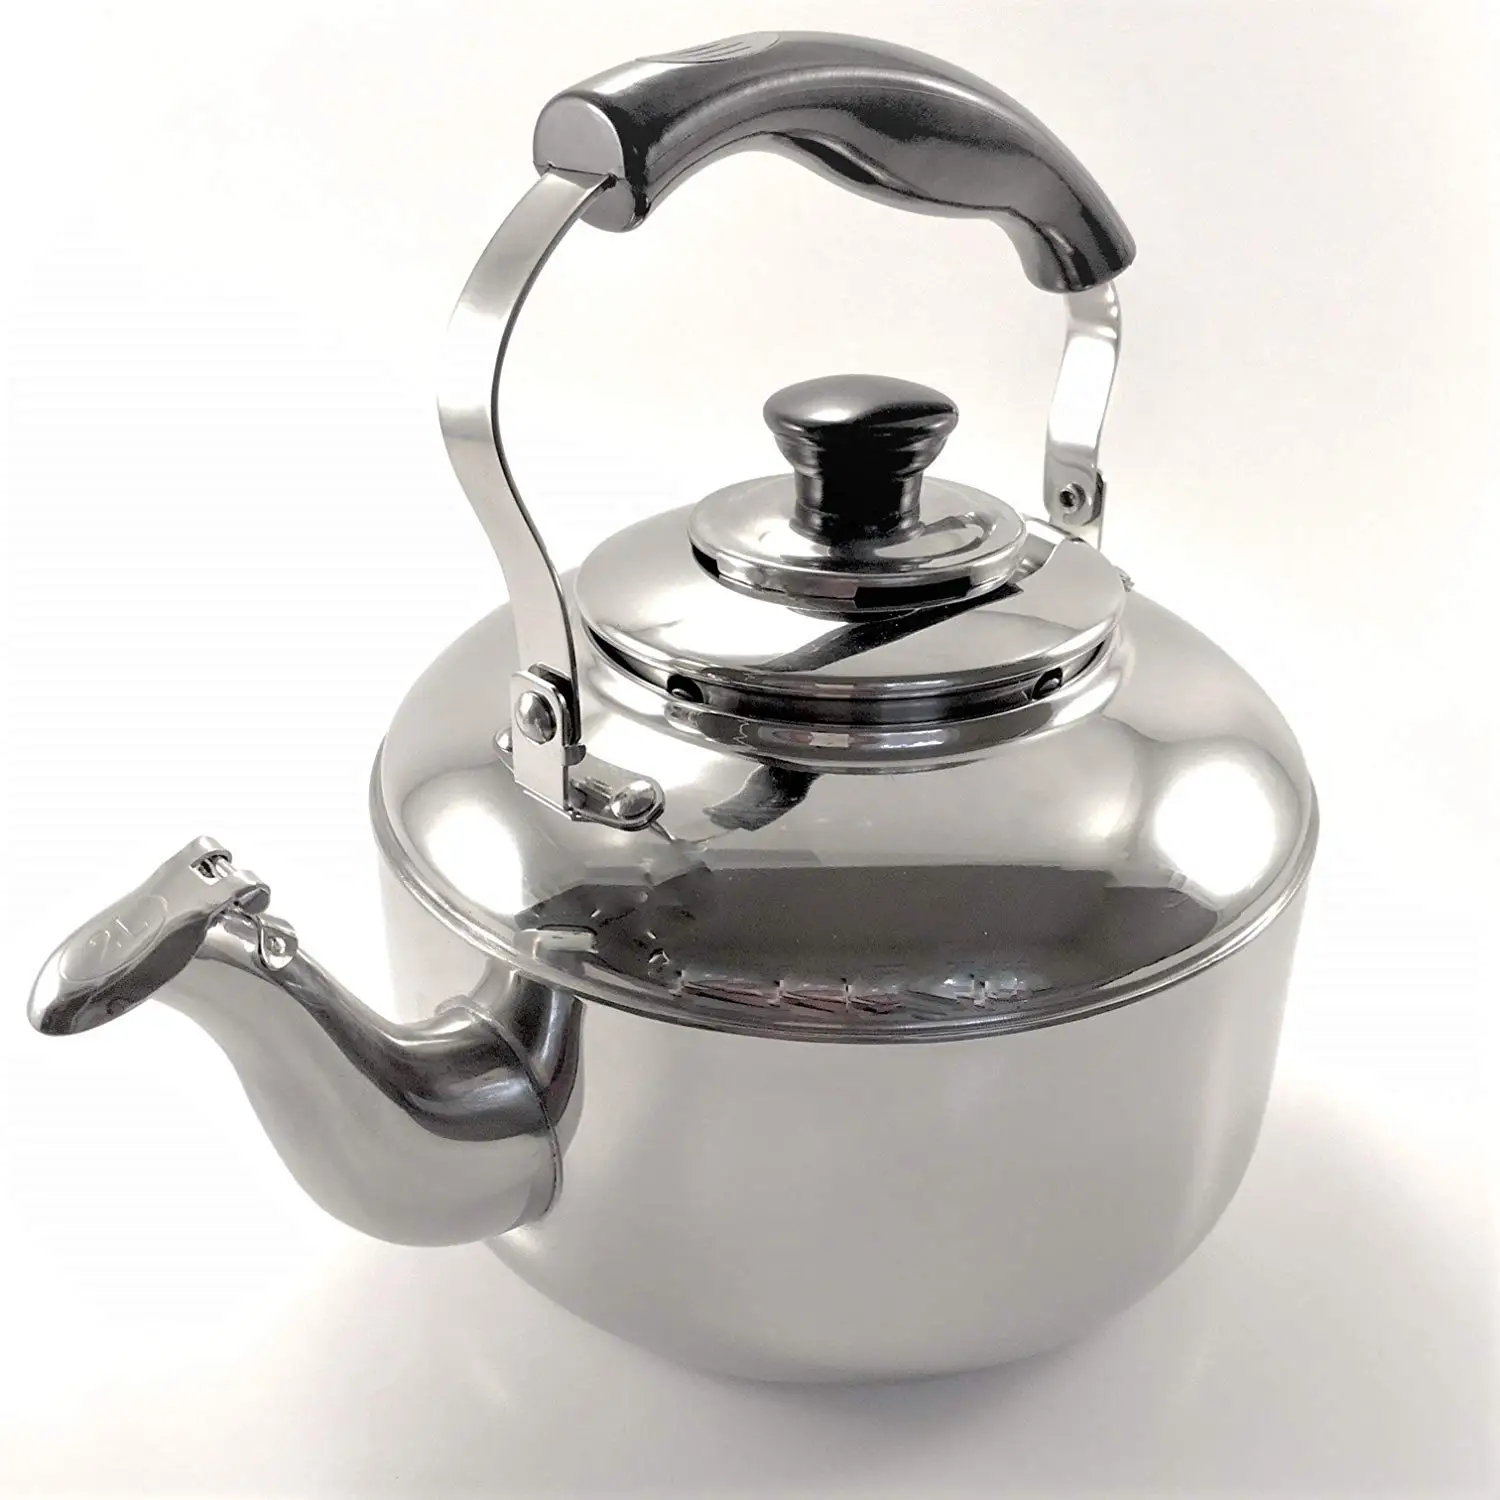 Лучший чайник из нержавеющей стали. Чайник Goldenberg GB-3108. Чайник Goldenberg GB-3117. Чайник Stainless Steel Zhujie kettle. Stainless Steel Windsor Whistling Tea kettle.